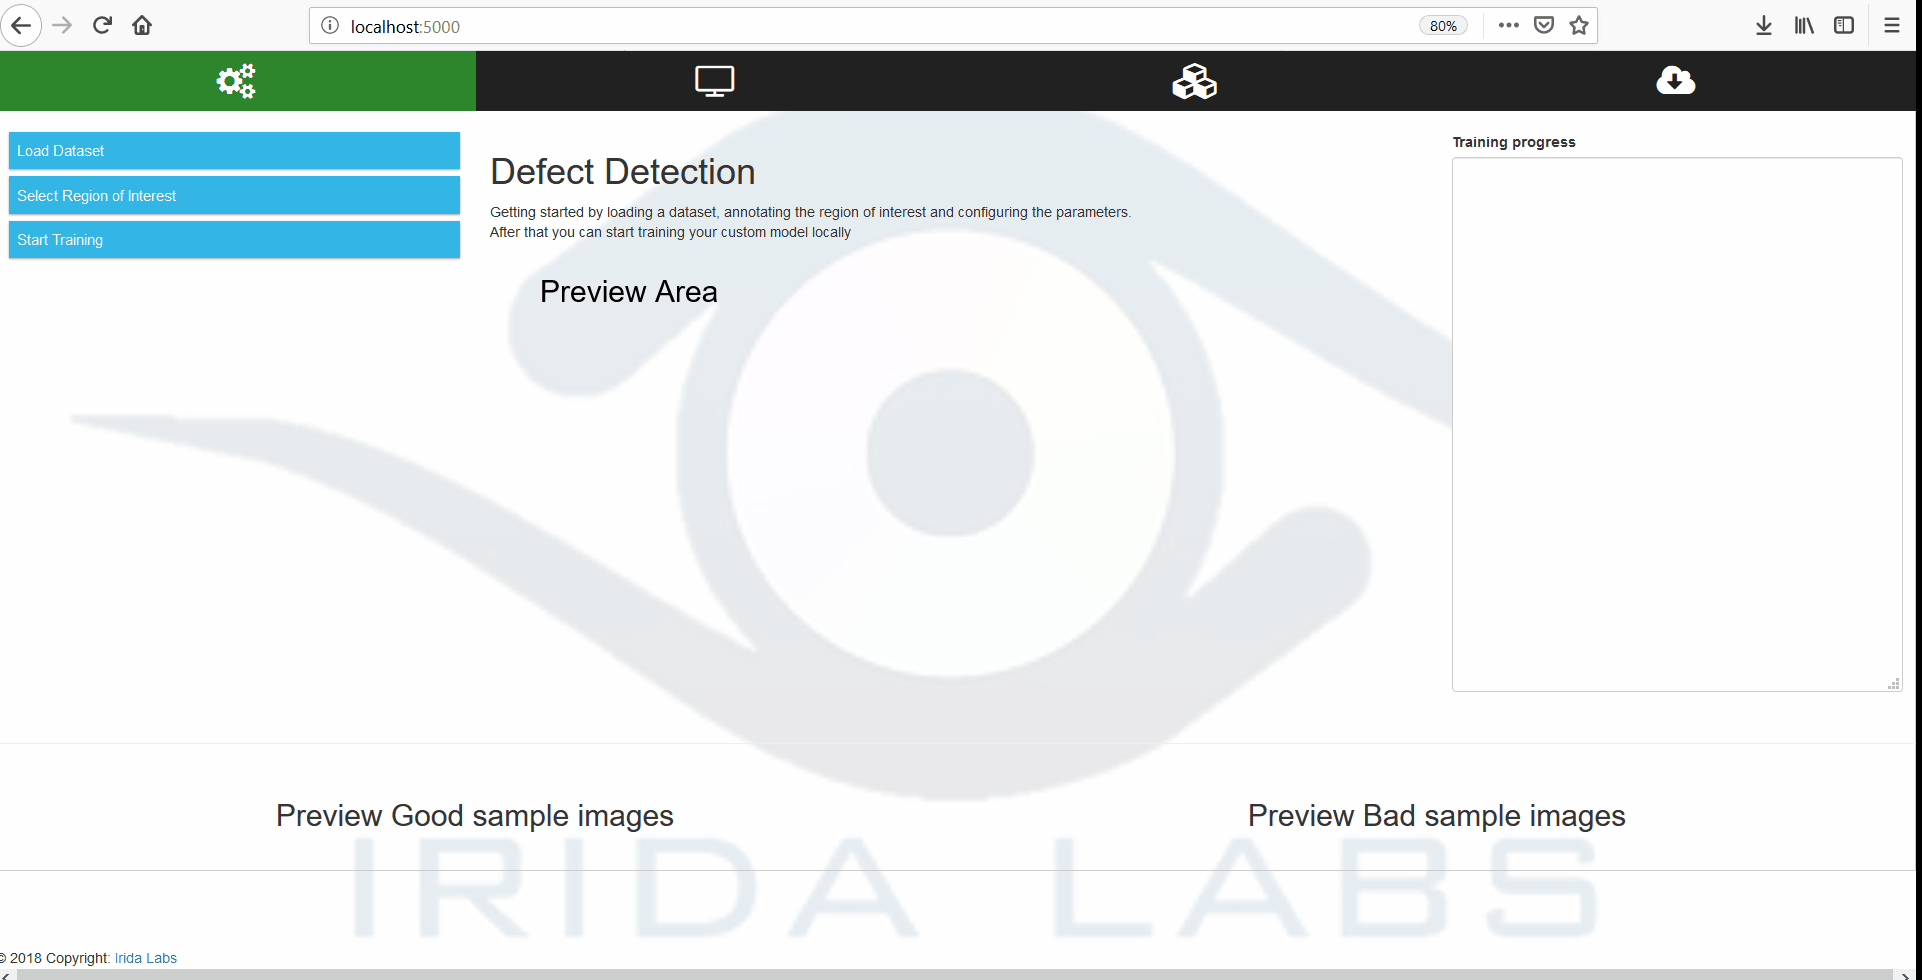 Defect Detection